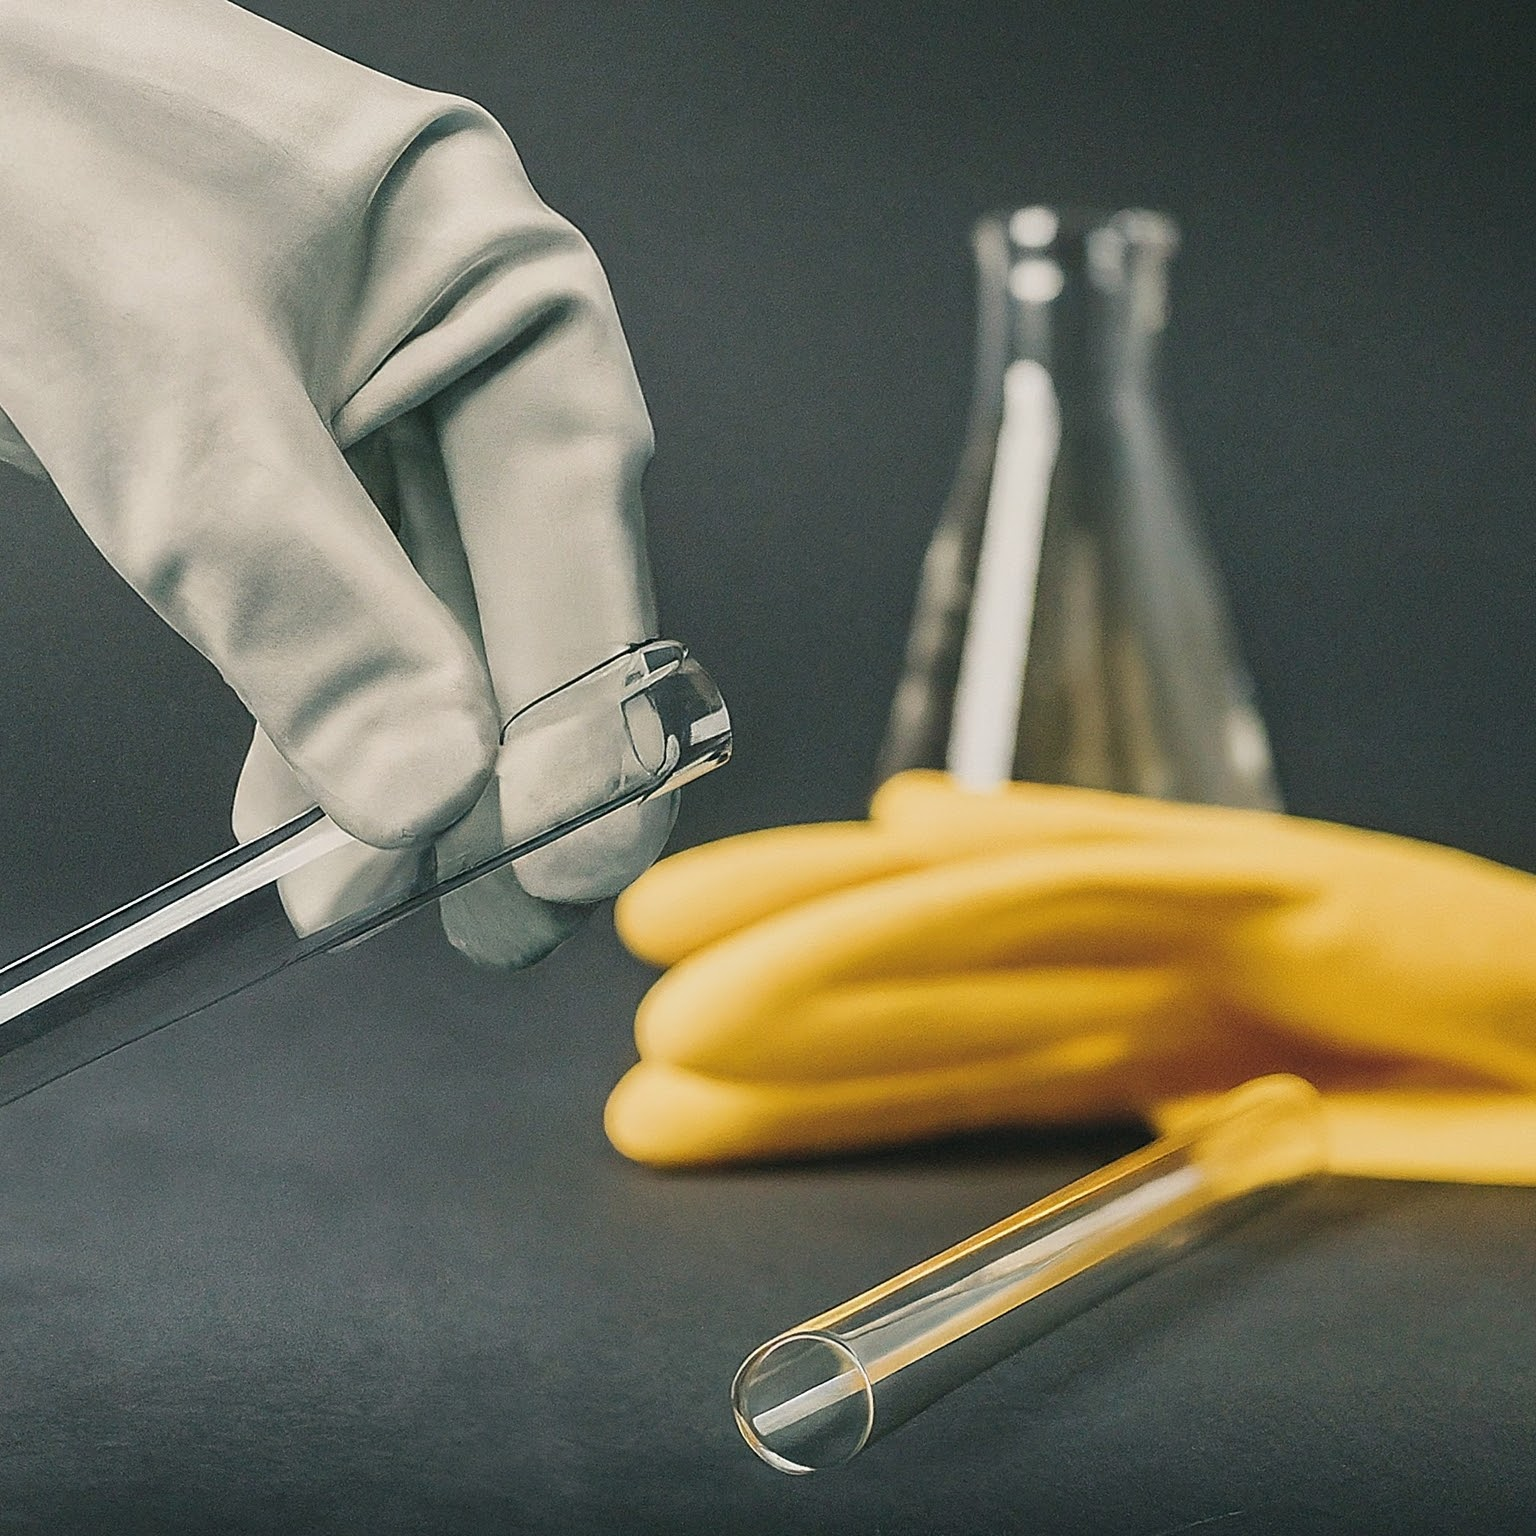 Lab safety measures for handling glassware